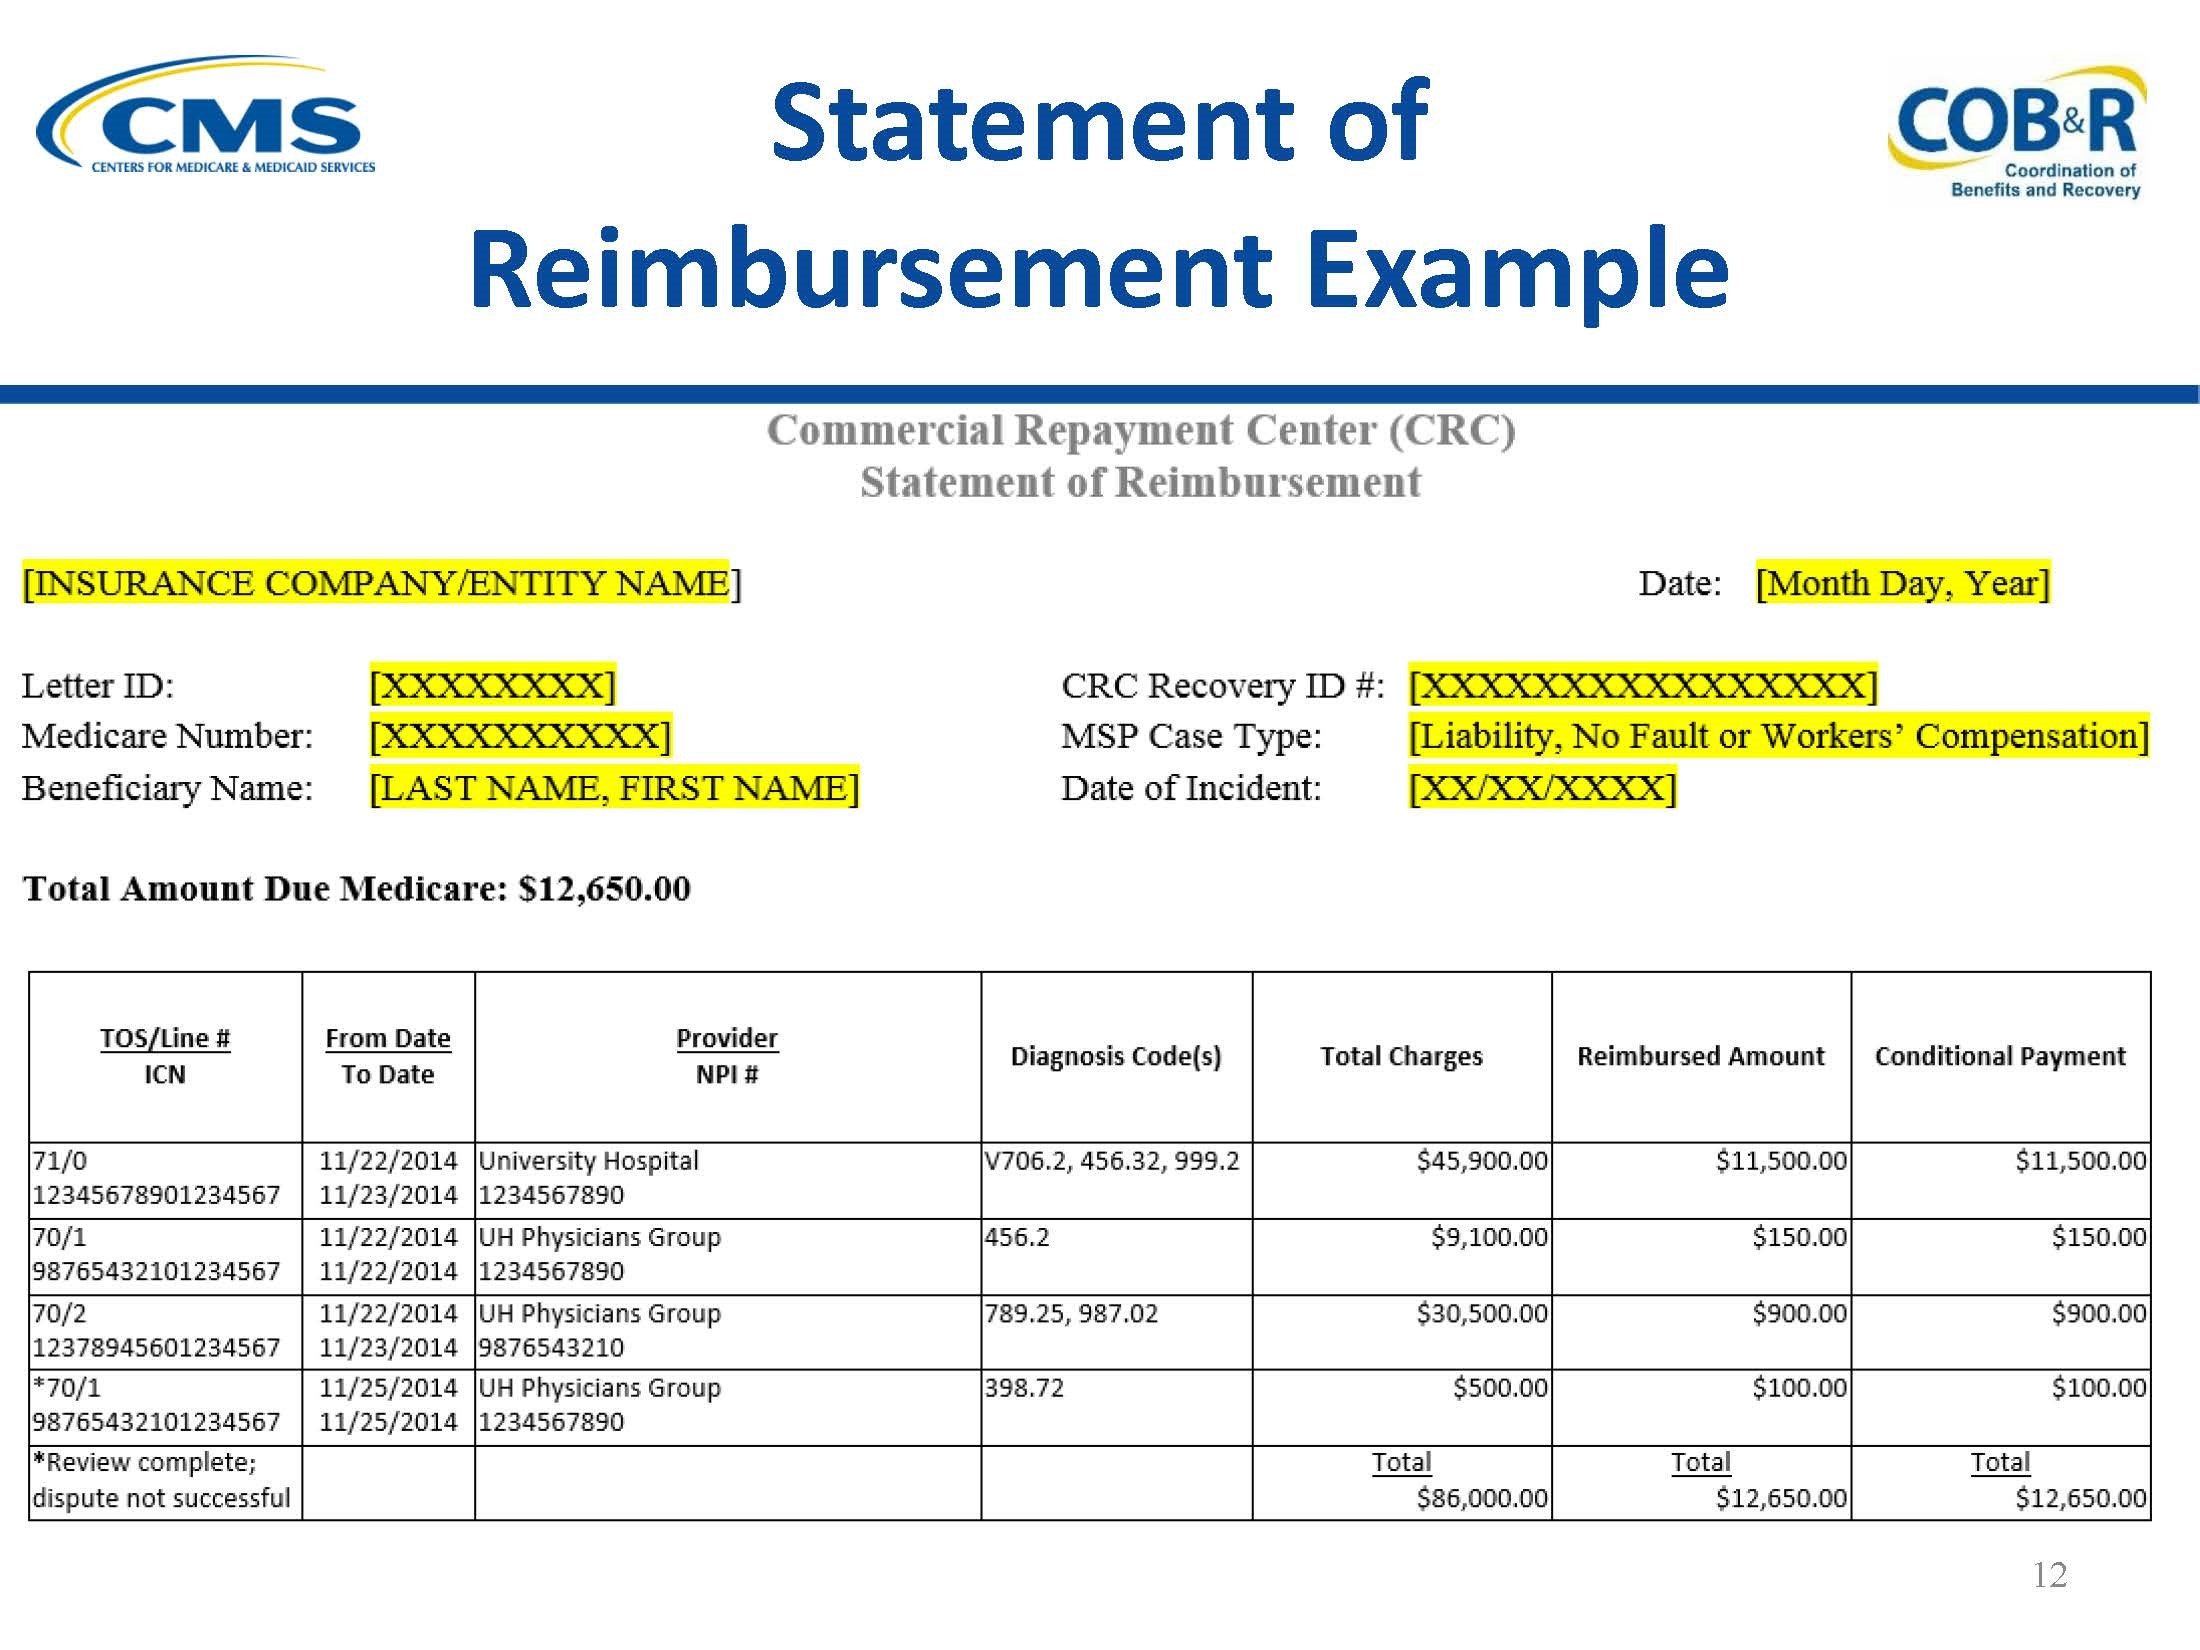 Example of Statement of Reimbursement